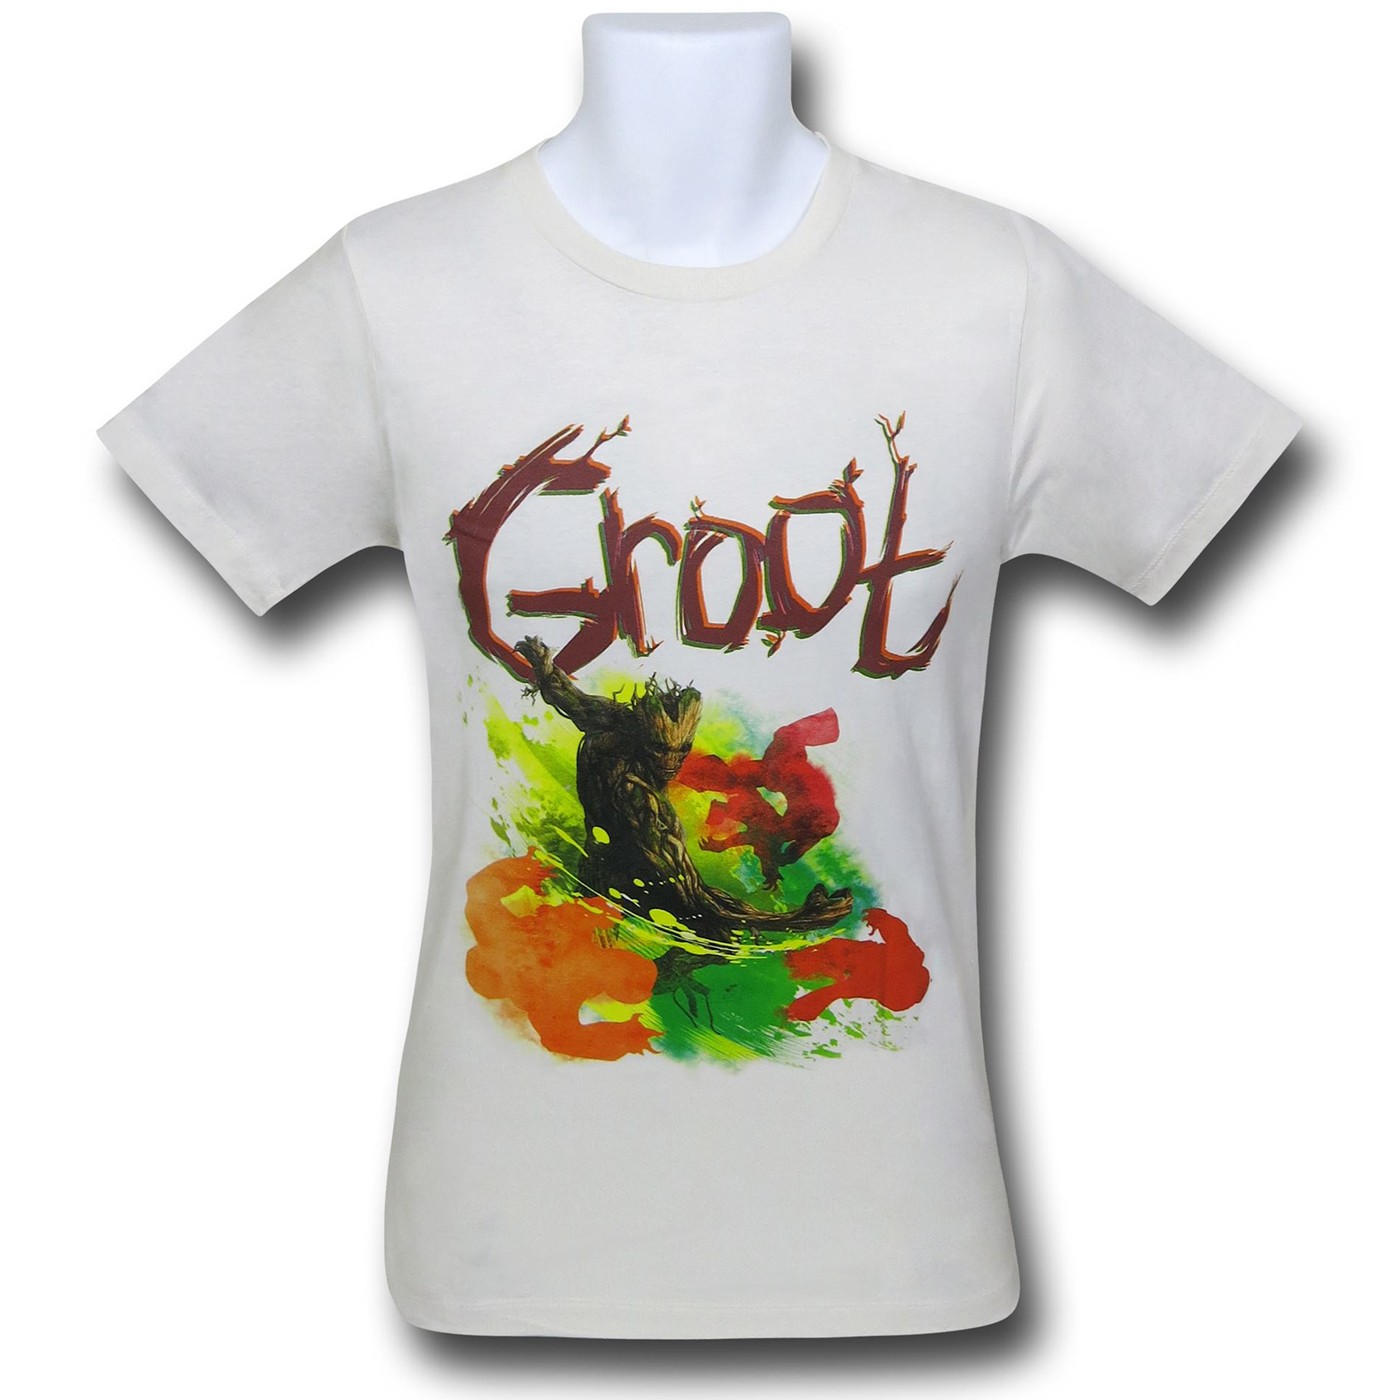 GOTG Groot on Cream 30 Single T-Shirt